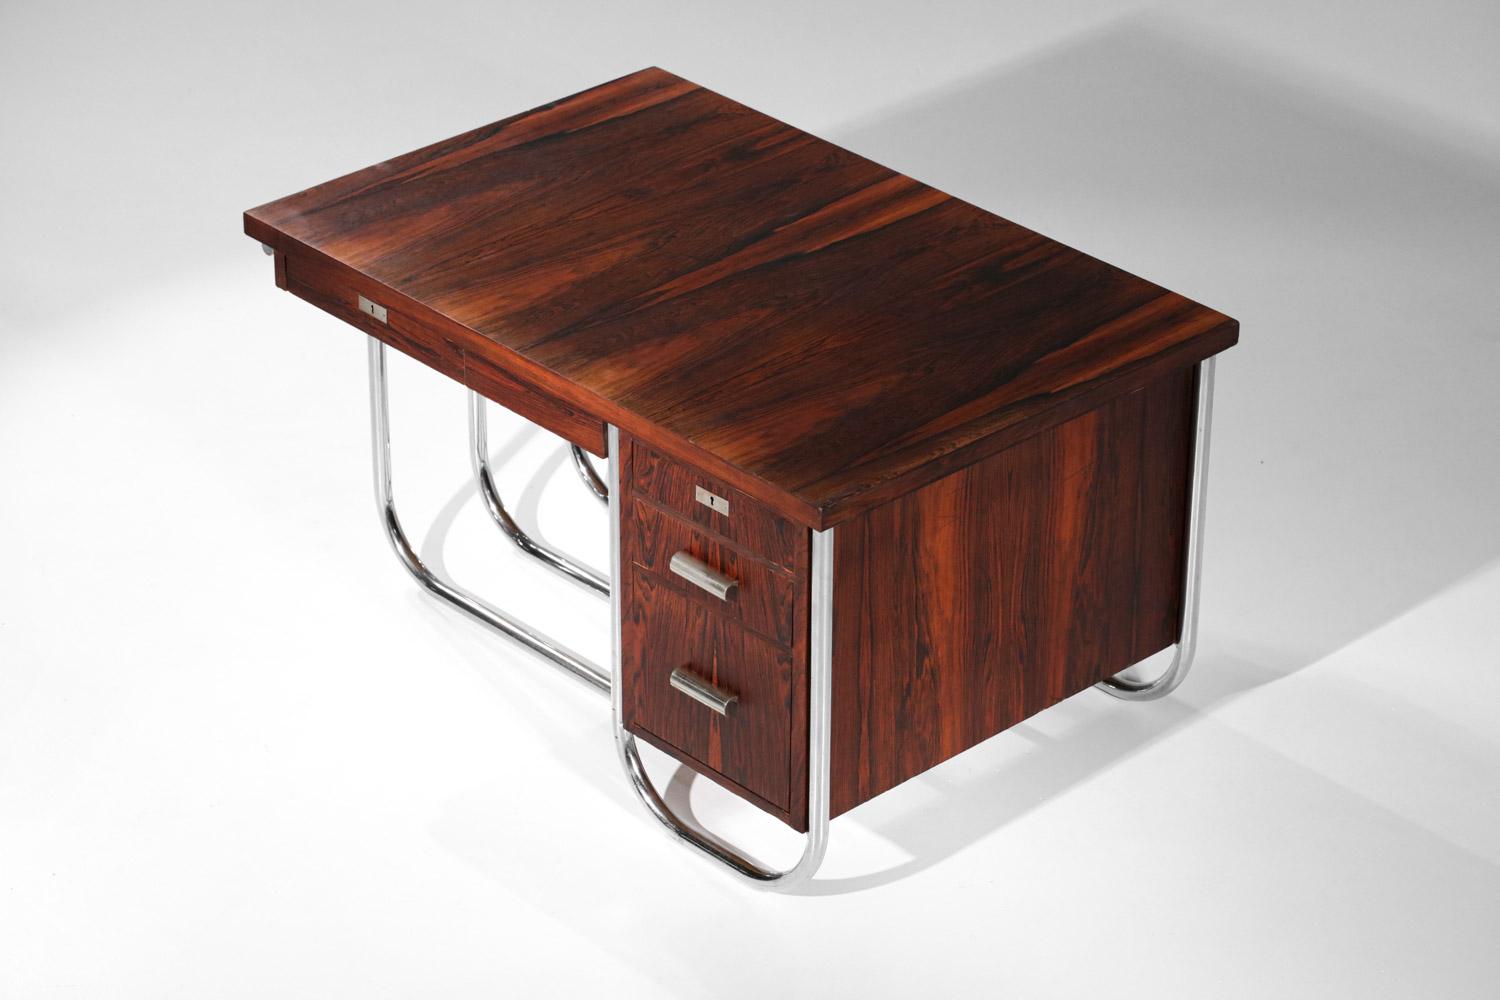 Modernist Desk in Solid Wood 40s / 50s Bauhaus Style Vintage For Sale 6